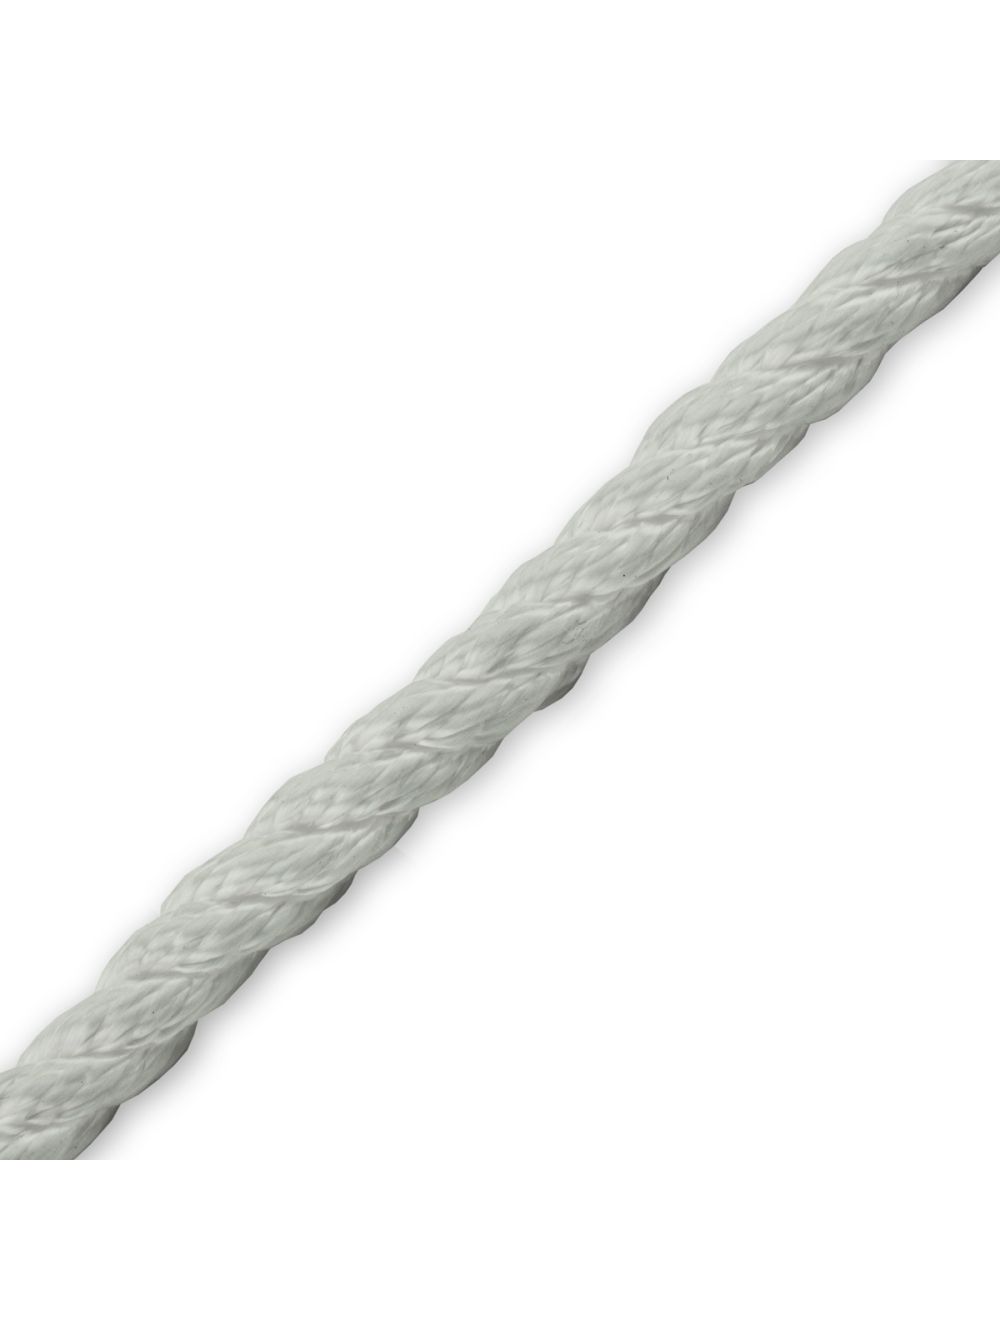 1/2 x 600' 3-Strand Twisted White Nylon Rope